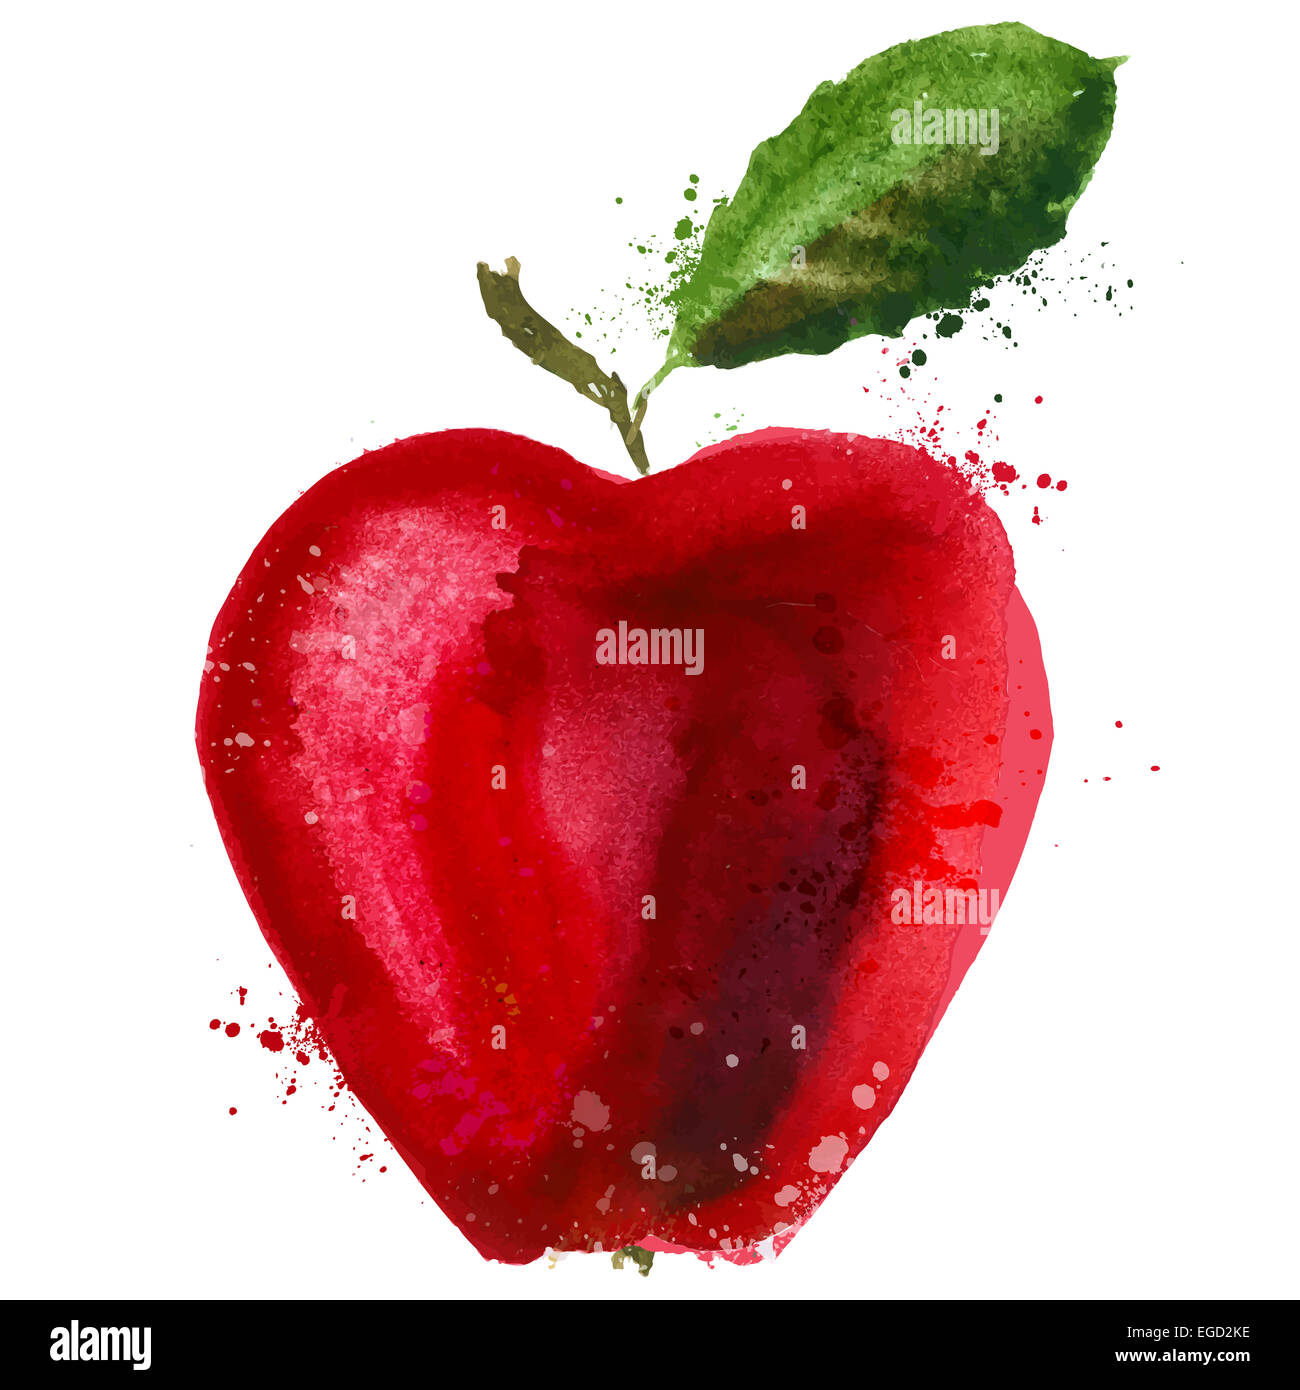 apple logo design template. food or fruit icon. Stock Photo